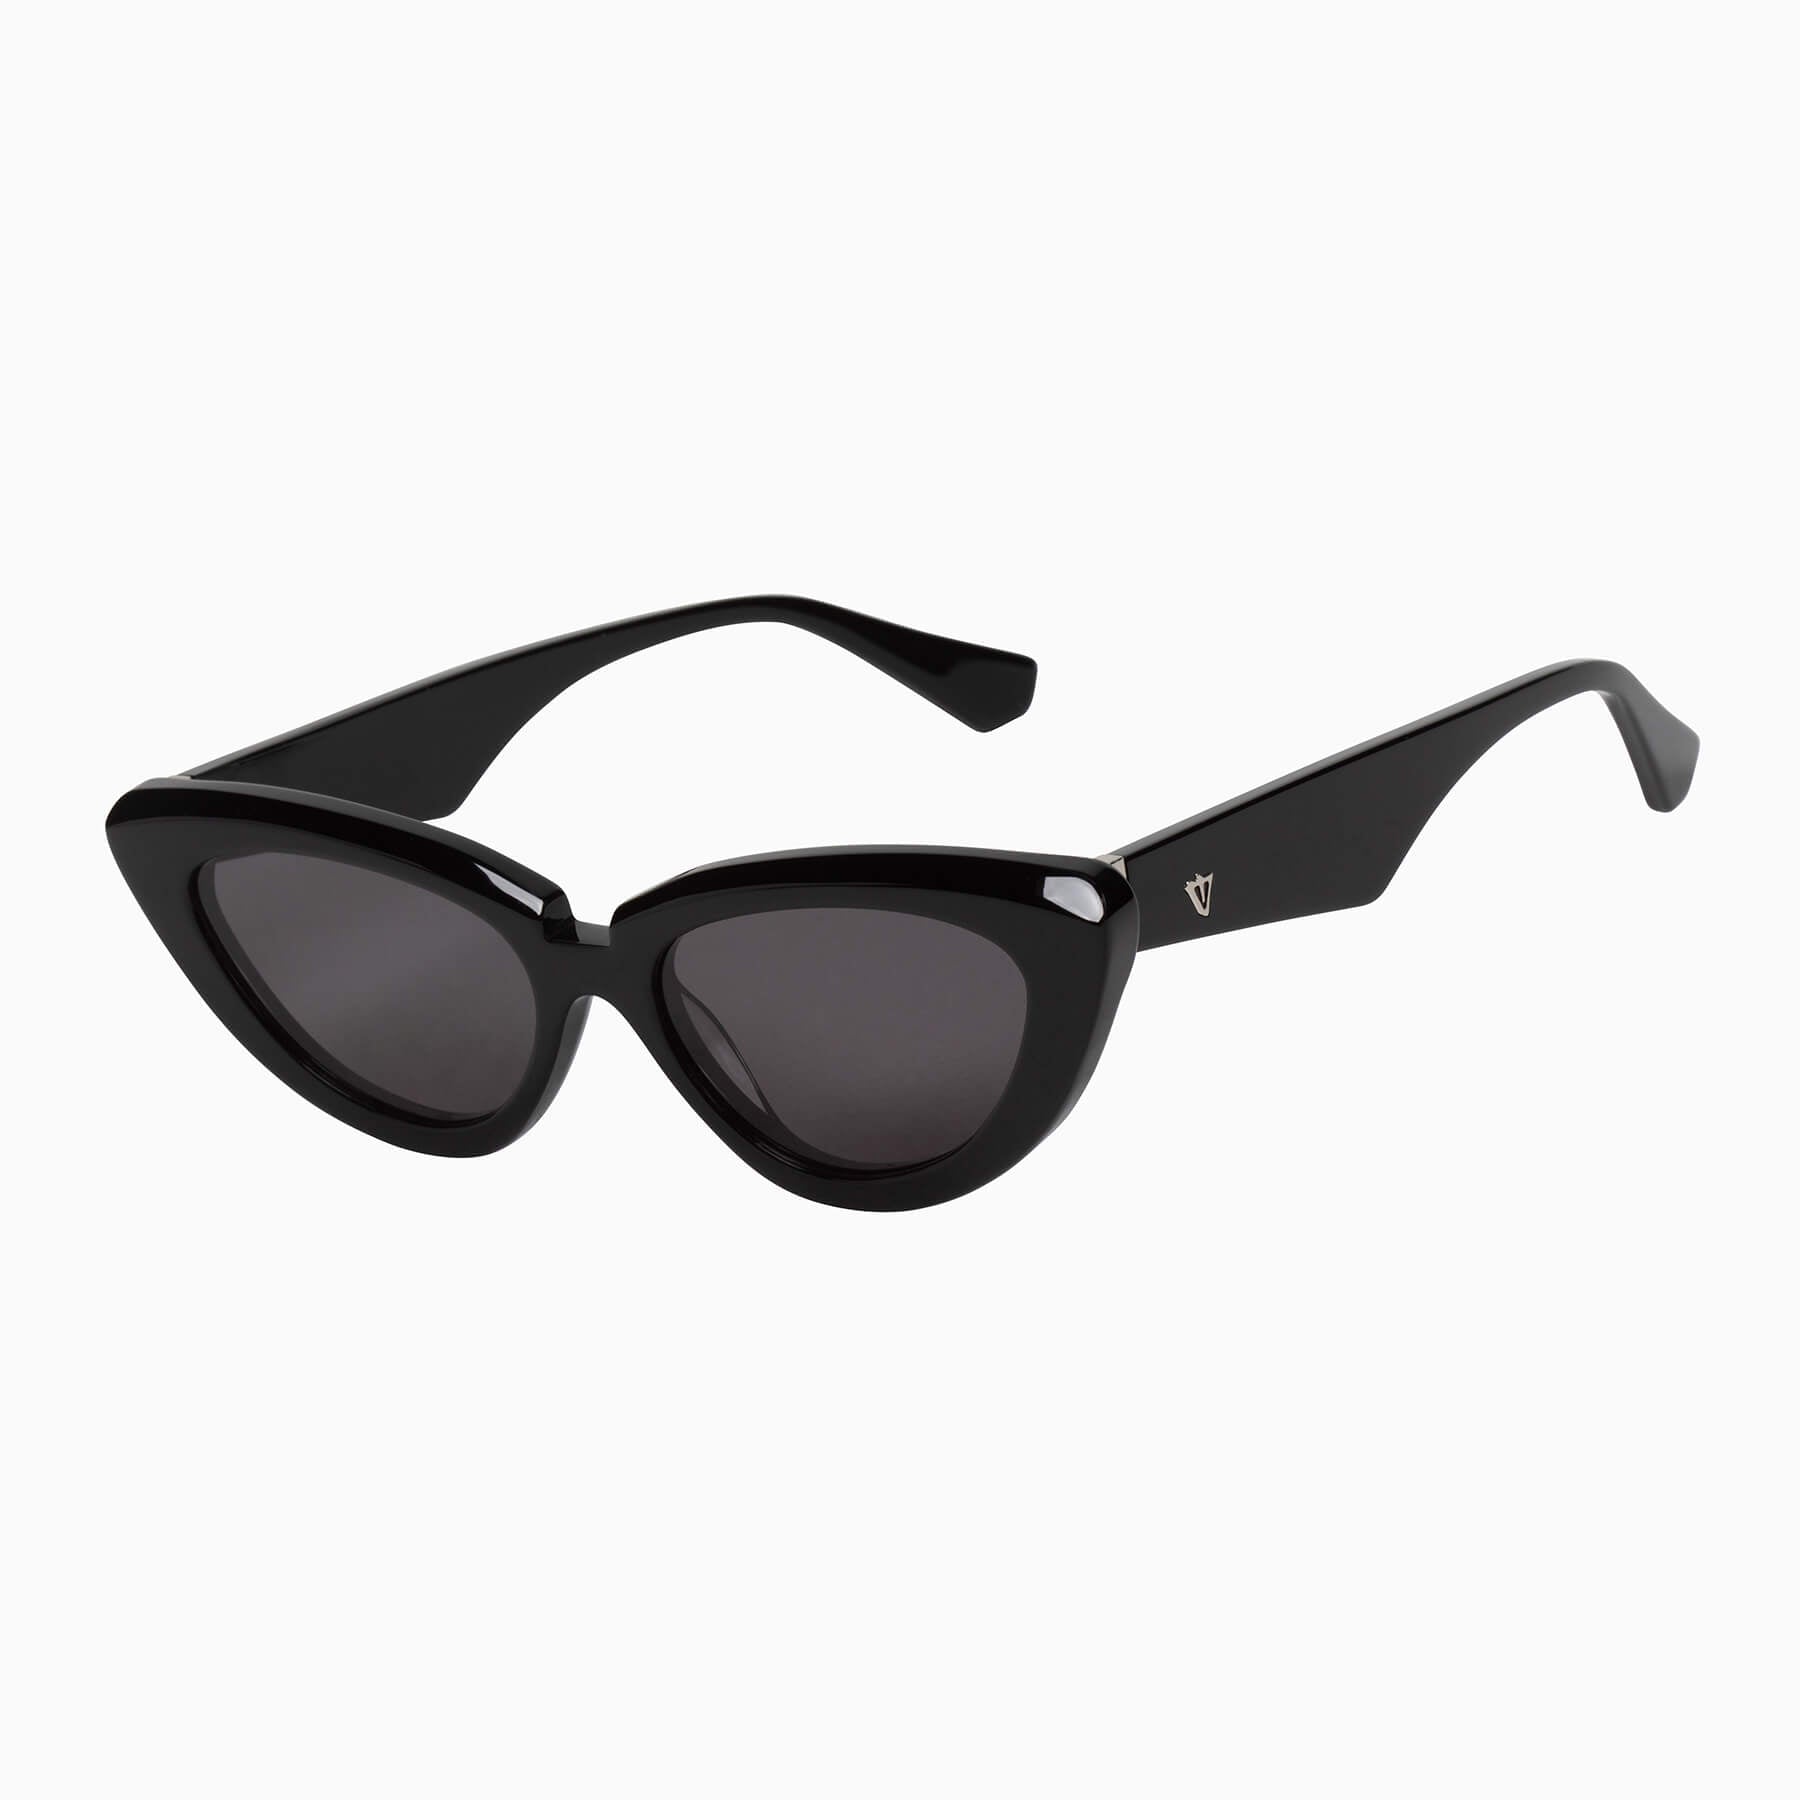 Valley Eyewear | Dayze | Sunglasses - Gloss Black w. Silver Metal Trim / Black Lens